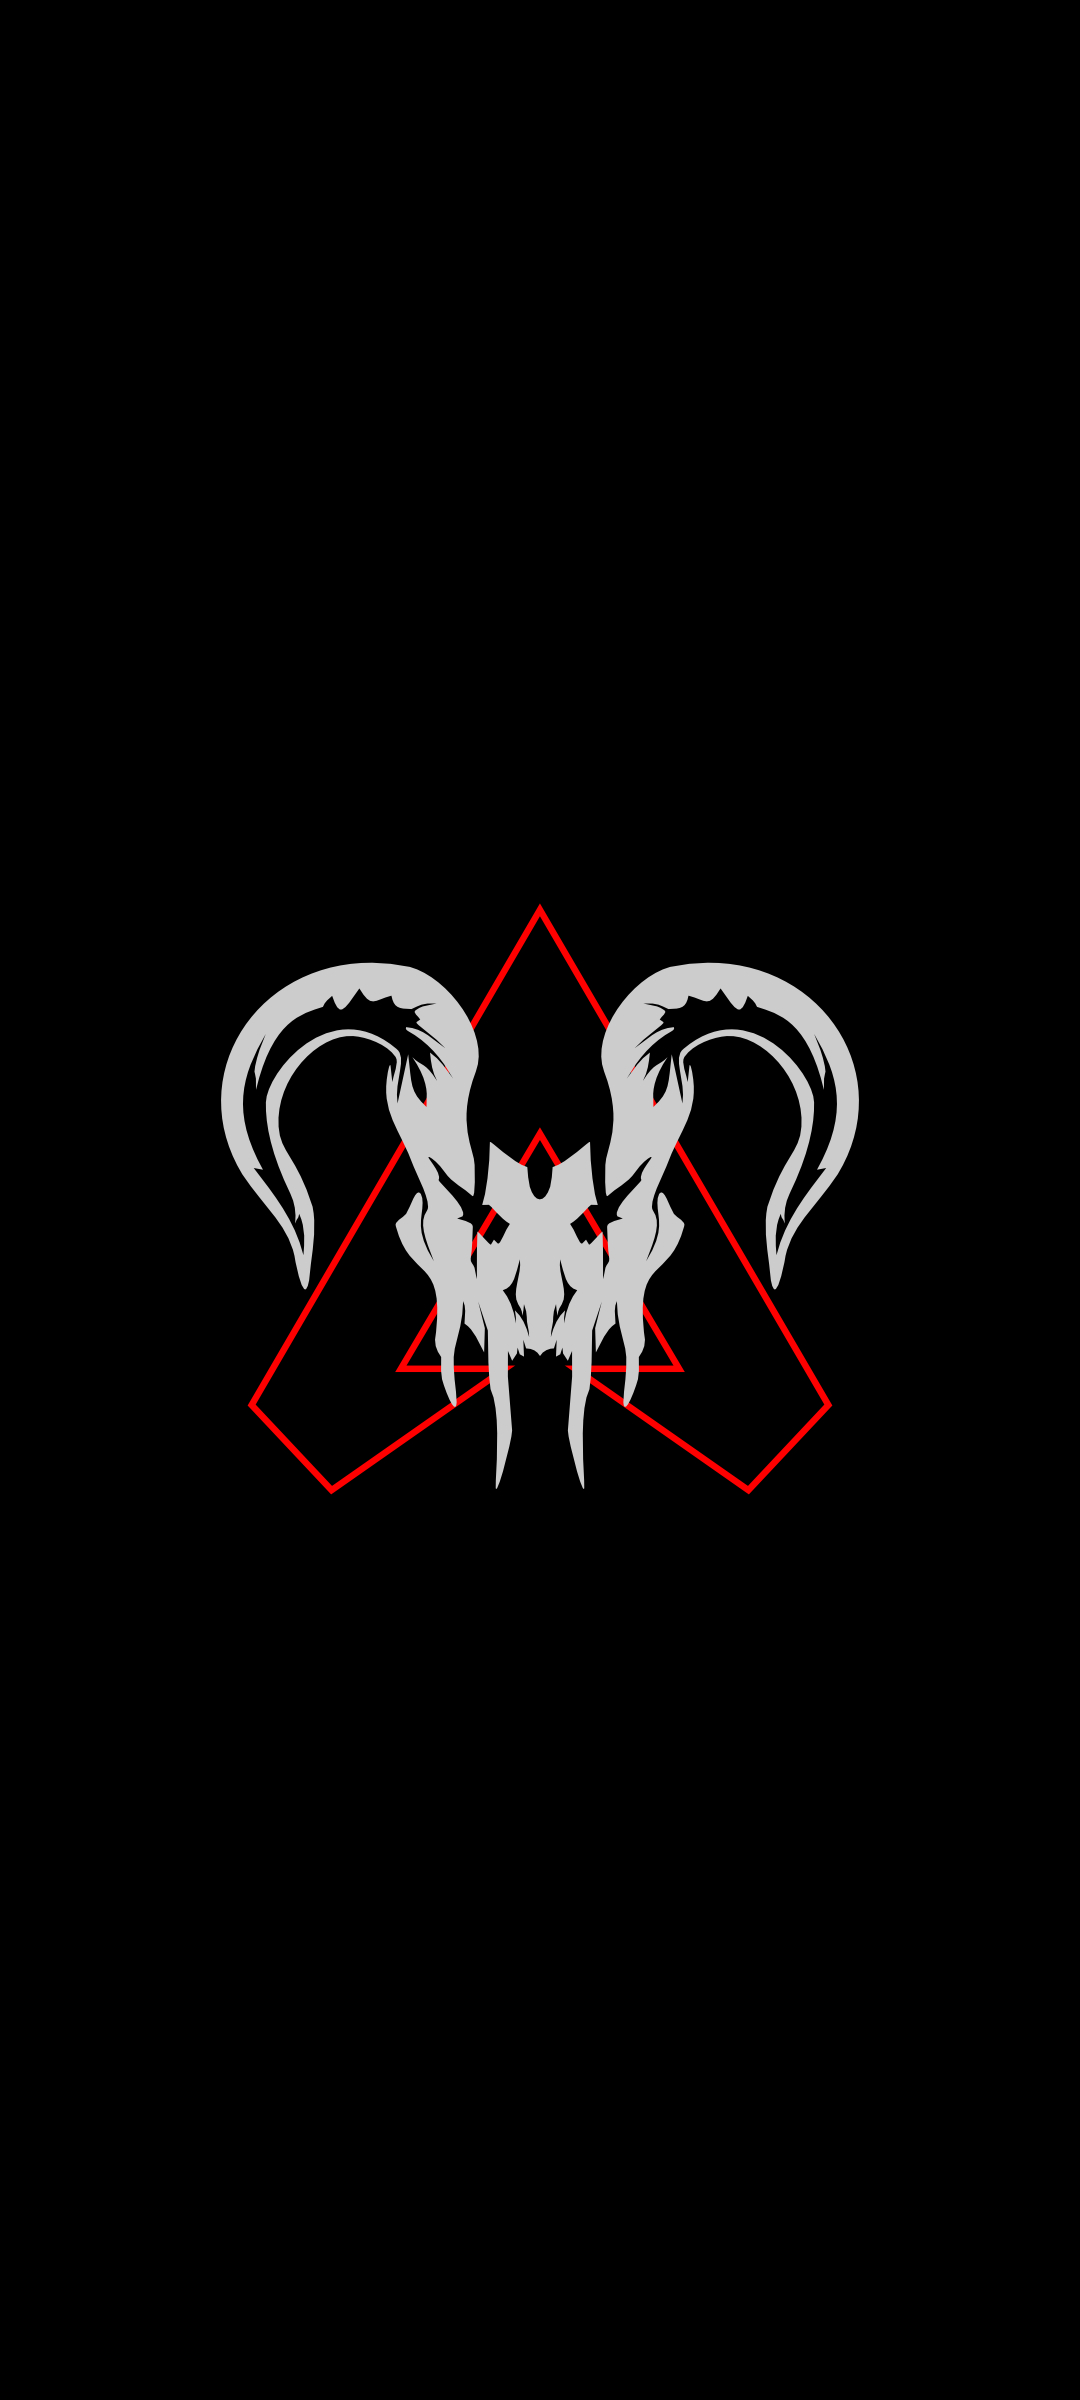 Apex Legends かっこいいプレデターのロゴ Predator Logo Galaxy S21 5g 壁紙 待ち受け Sumaran